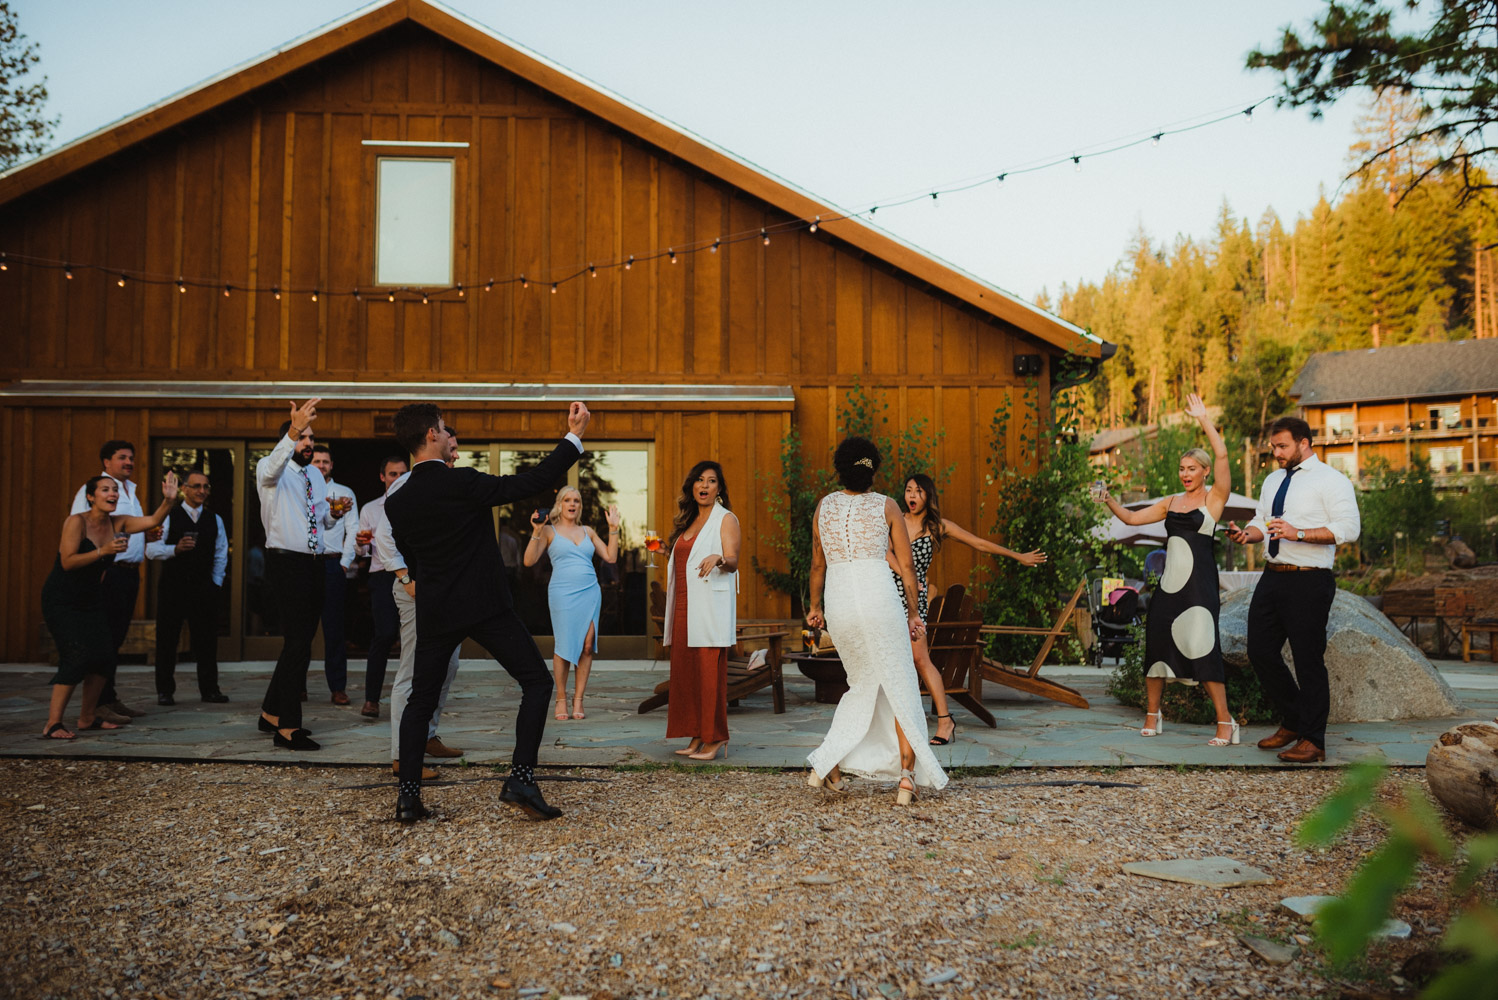 Rush Creek Lodge wedding, couple dancing with friends photo